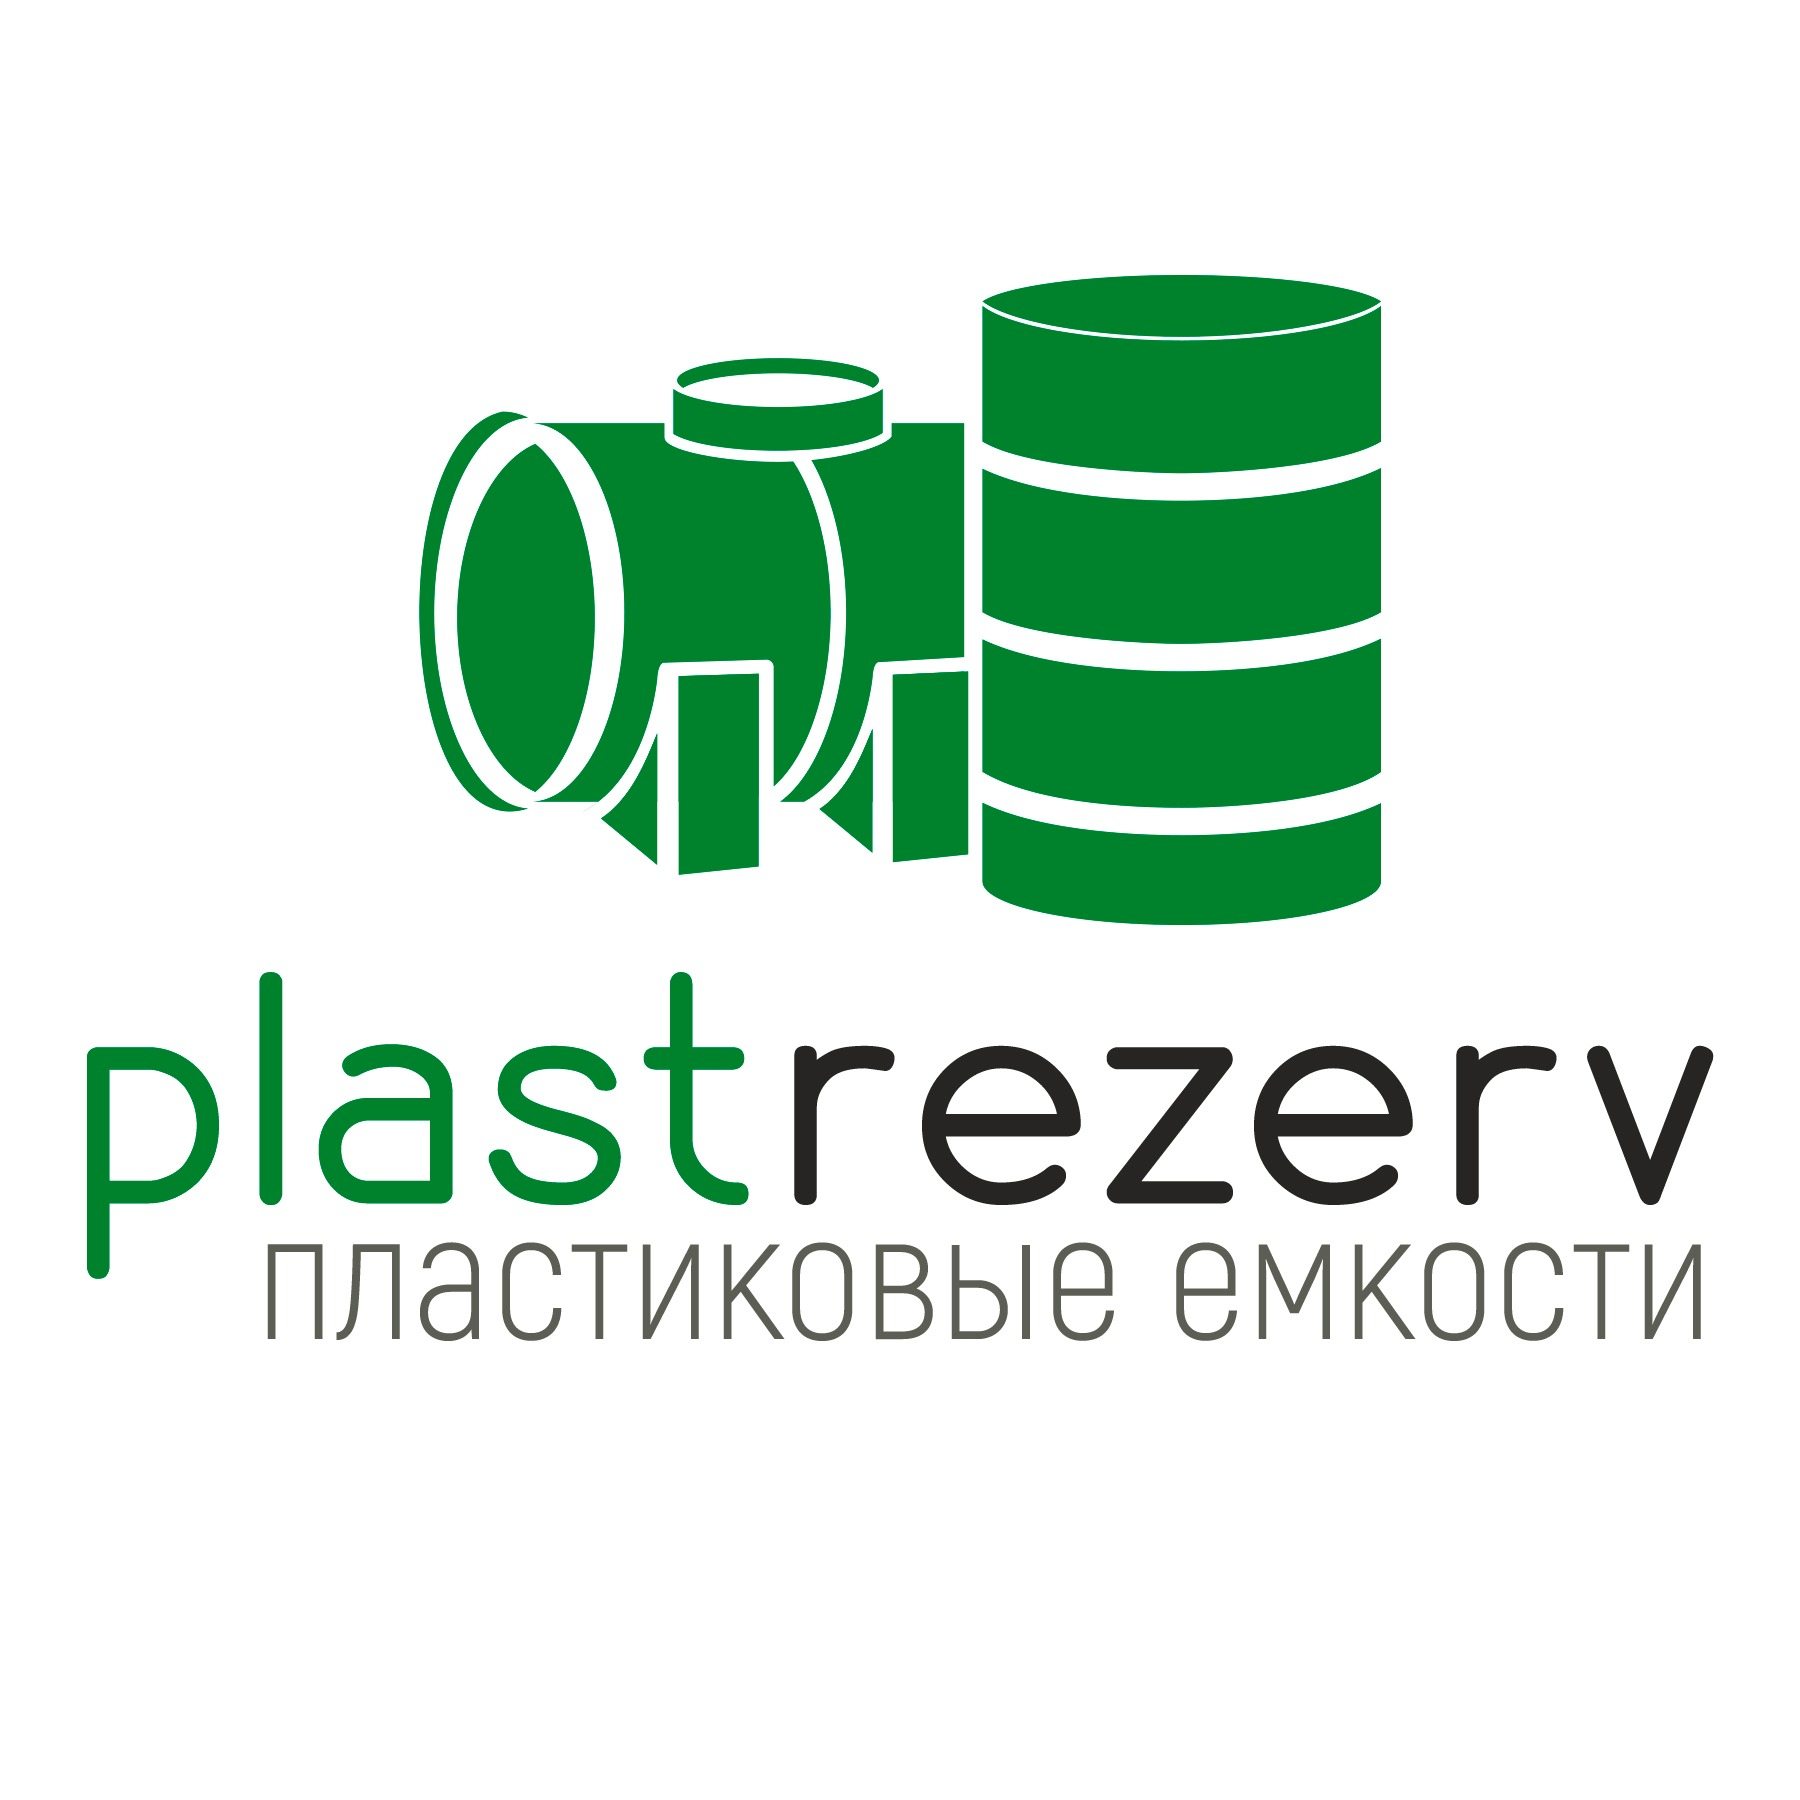 PlastRezerv